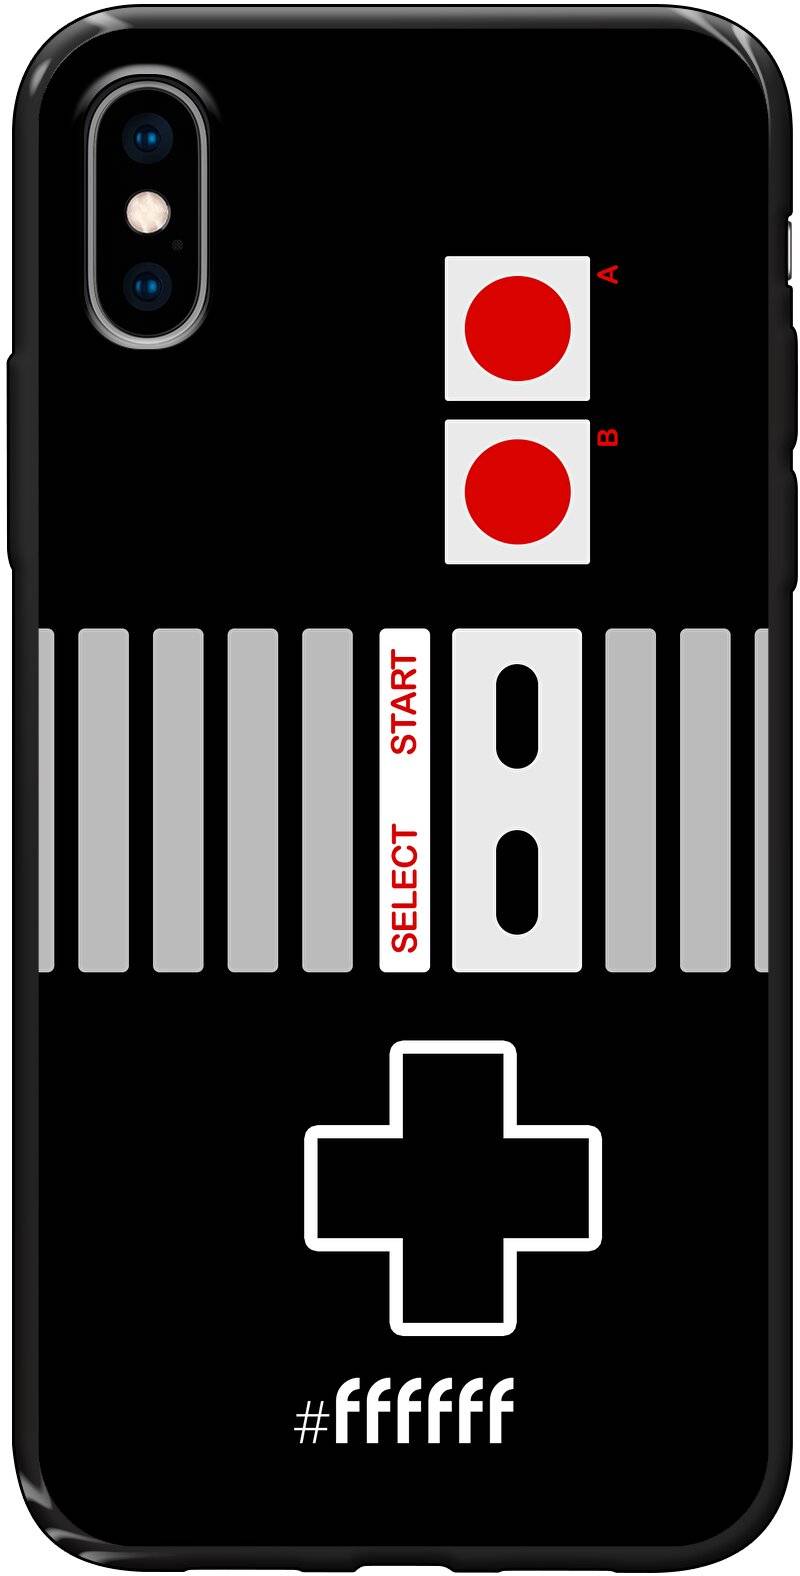 NES Controller iPhone X